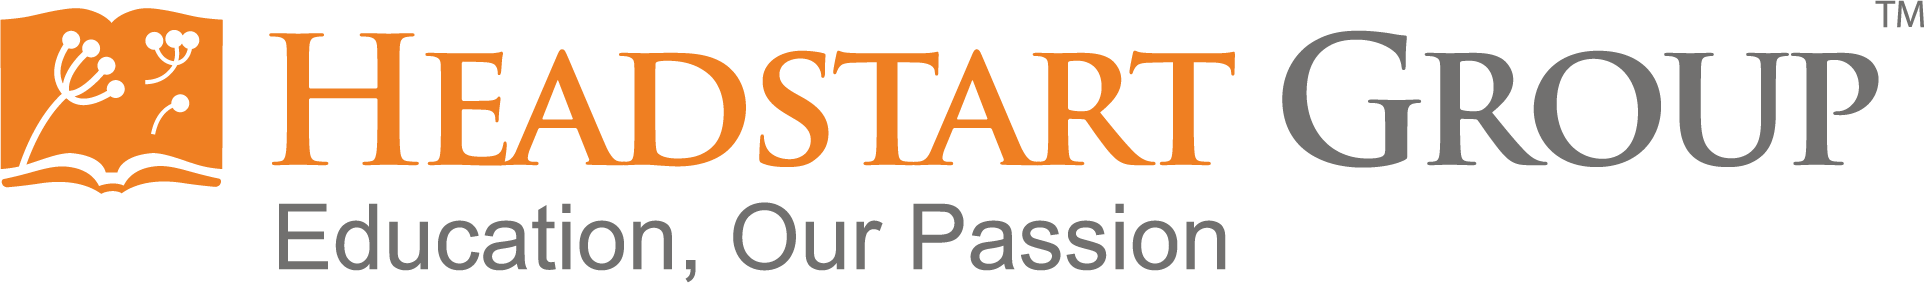 huge headstart orange logo plus motto